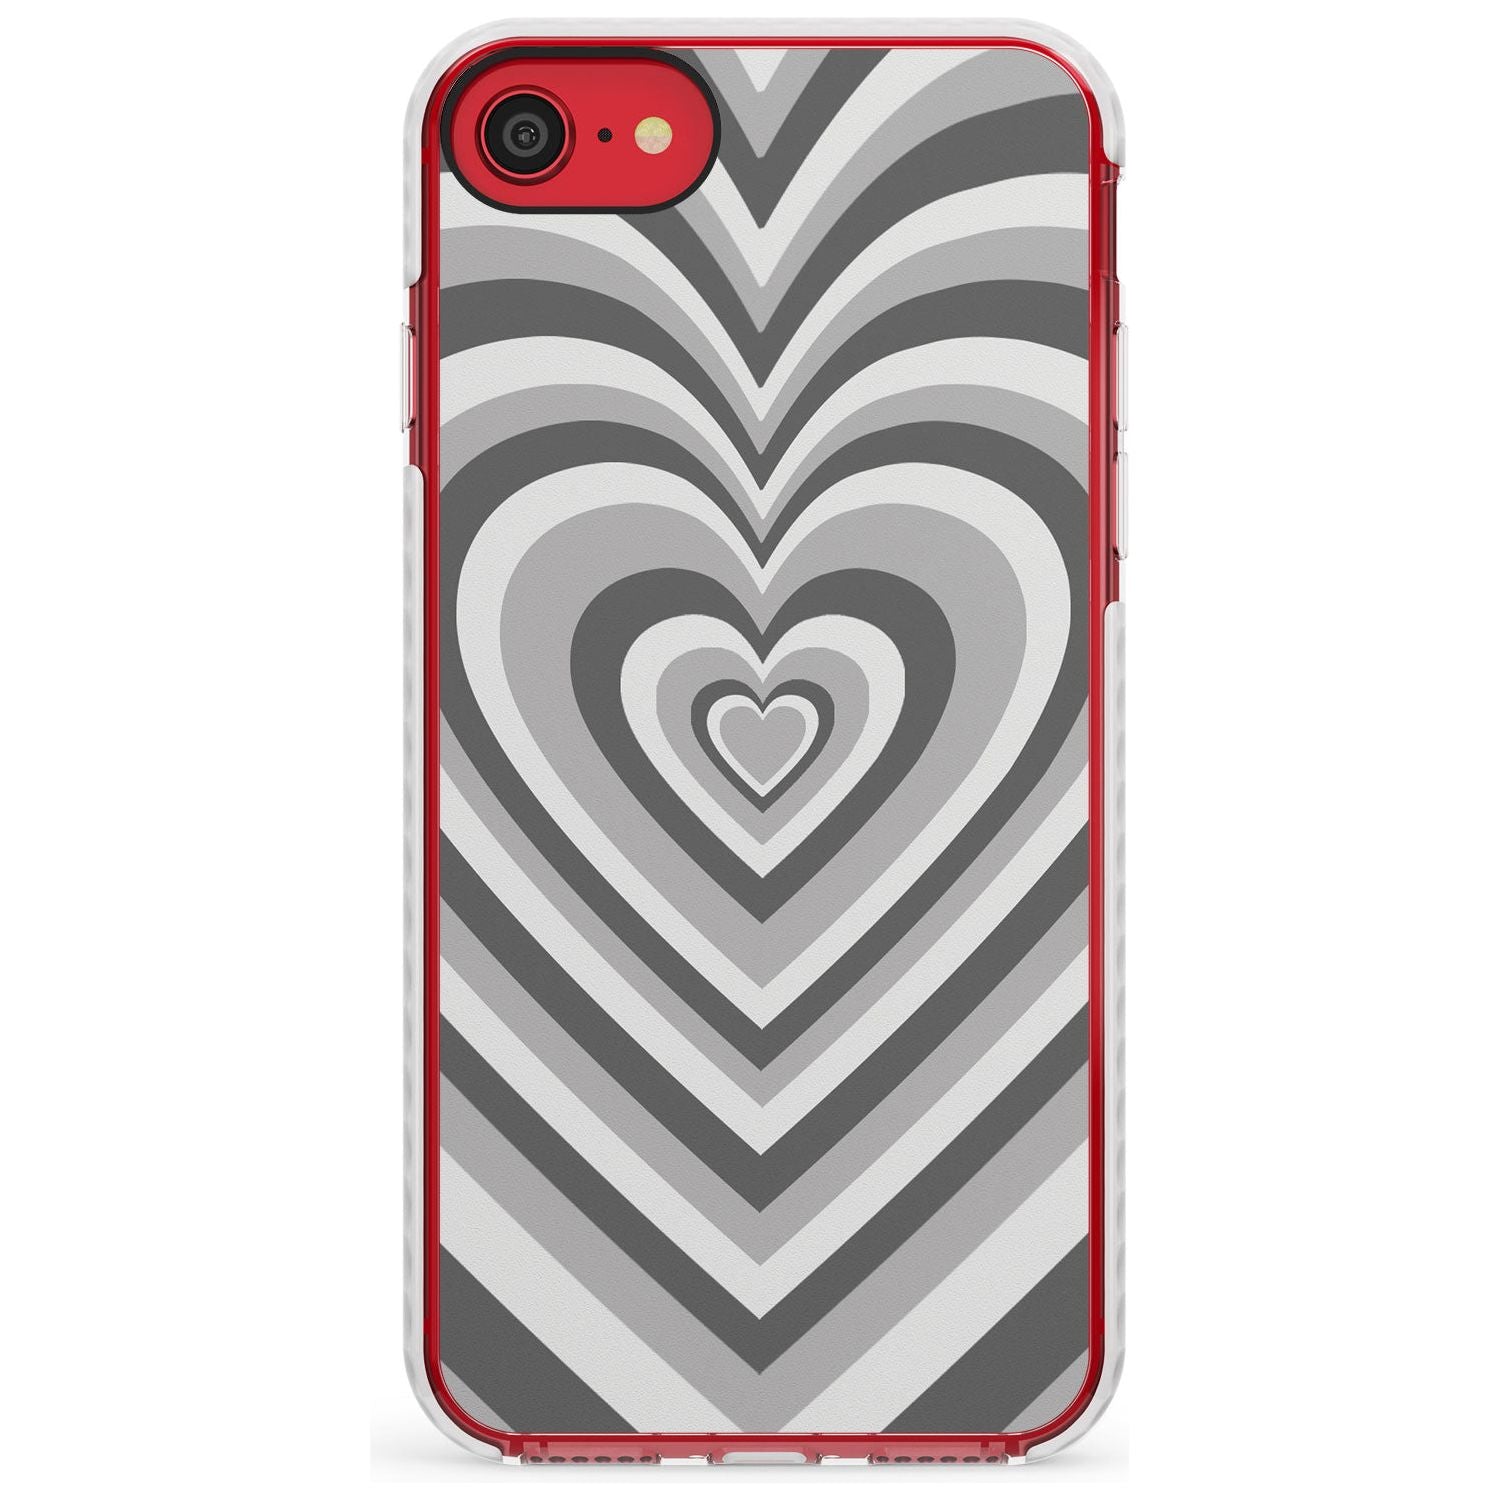 Monochrome Heart Illusion Impact Phone Case for iPhone SE 8 7 Plus